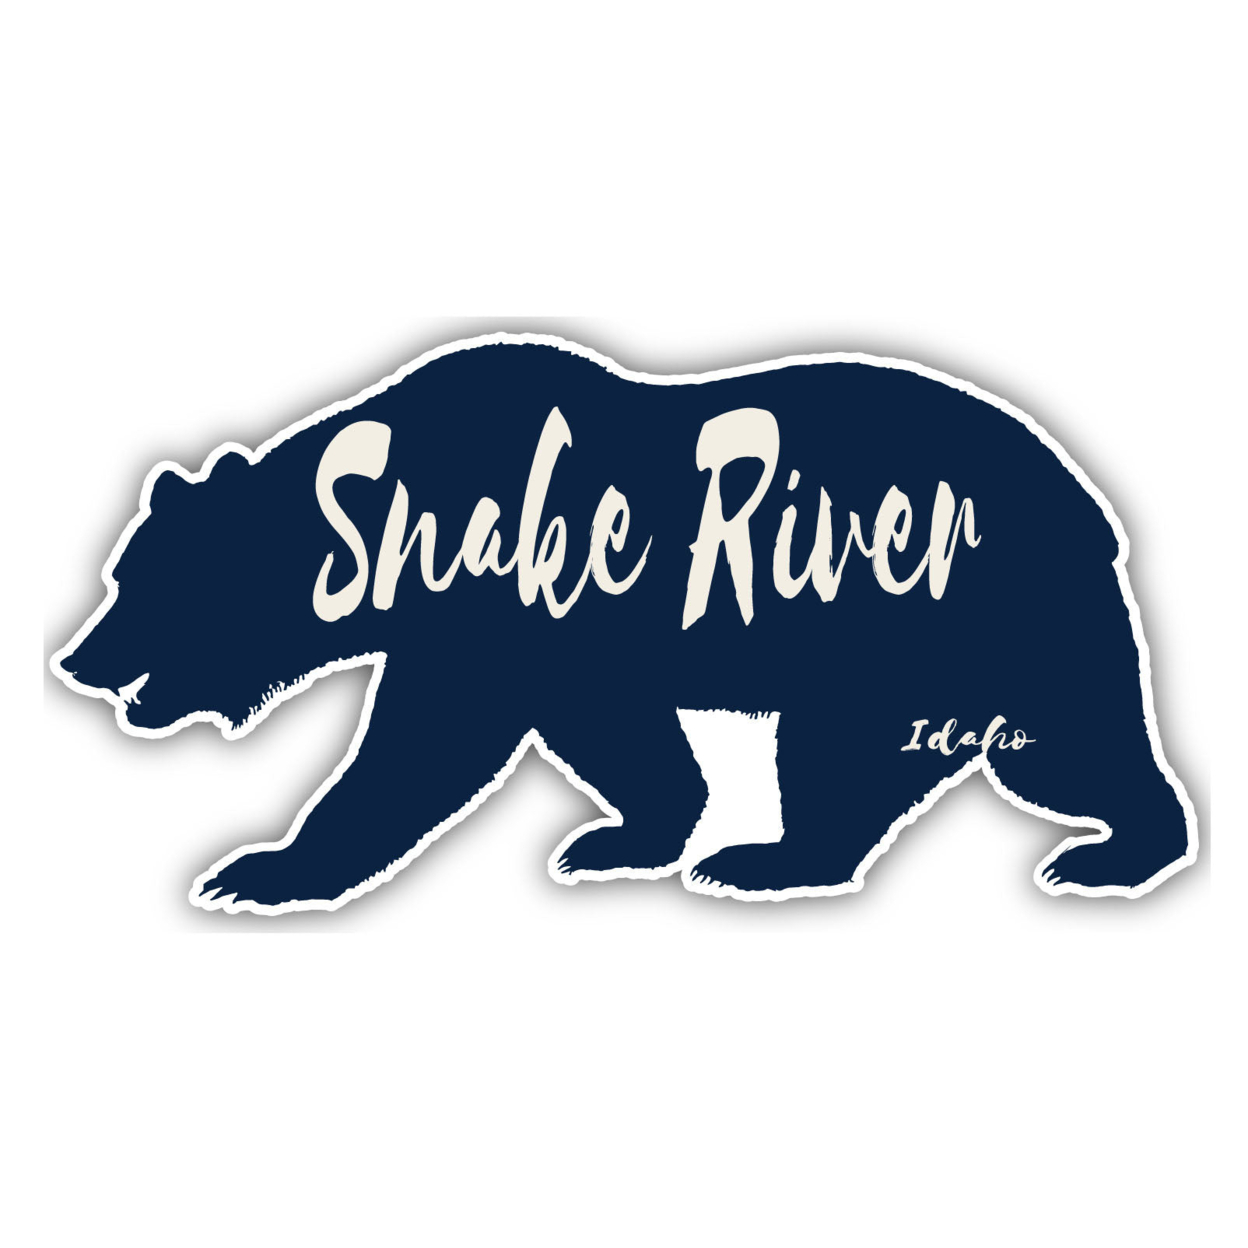 Snake River Idaho Souvenir Decorative Stickers (Choose Theme And Size) - Single Unit, 2-Inch, Tent